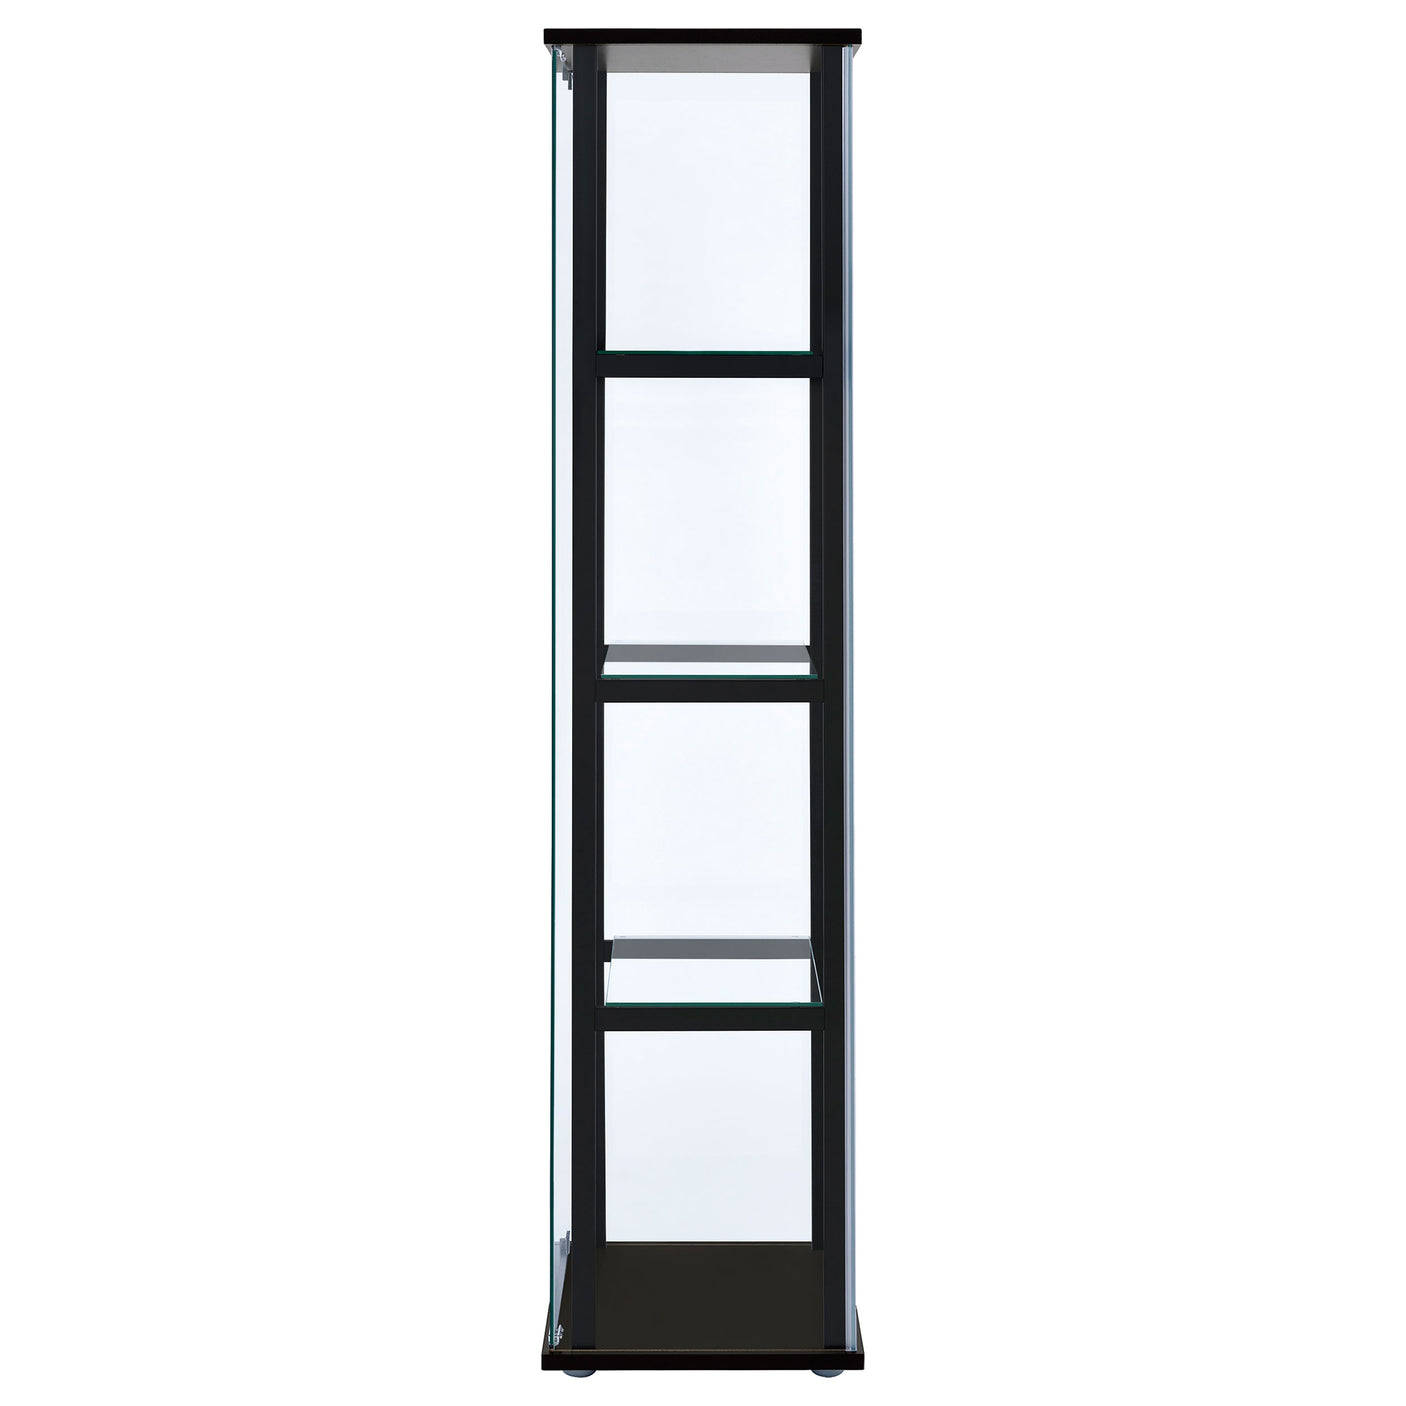 Curio Cabinet - Cyclamen 4-shelf Glass Curio Cabinet Black and Clear